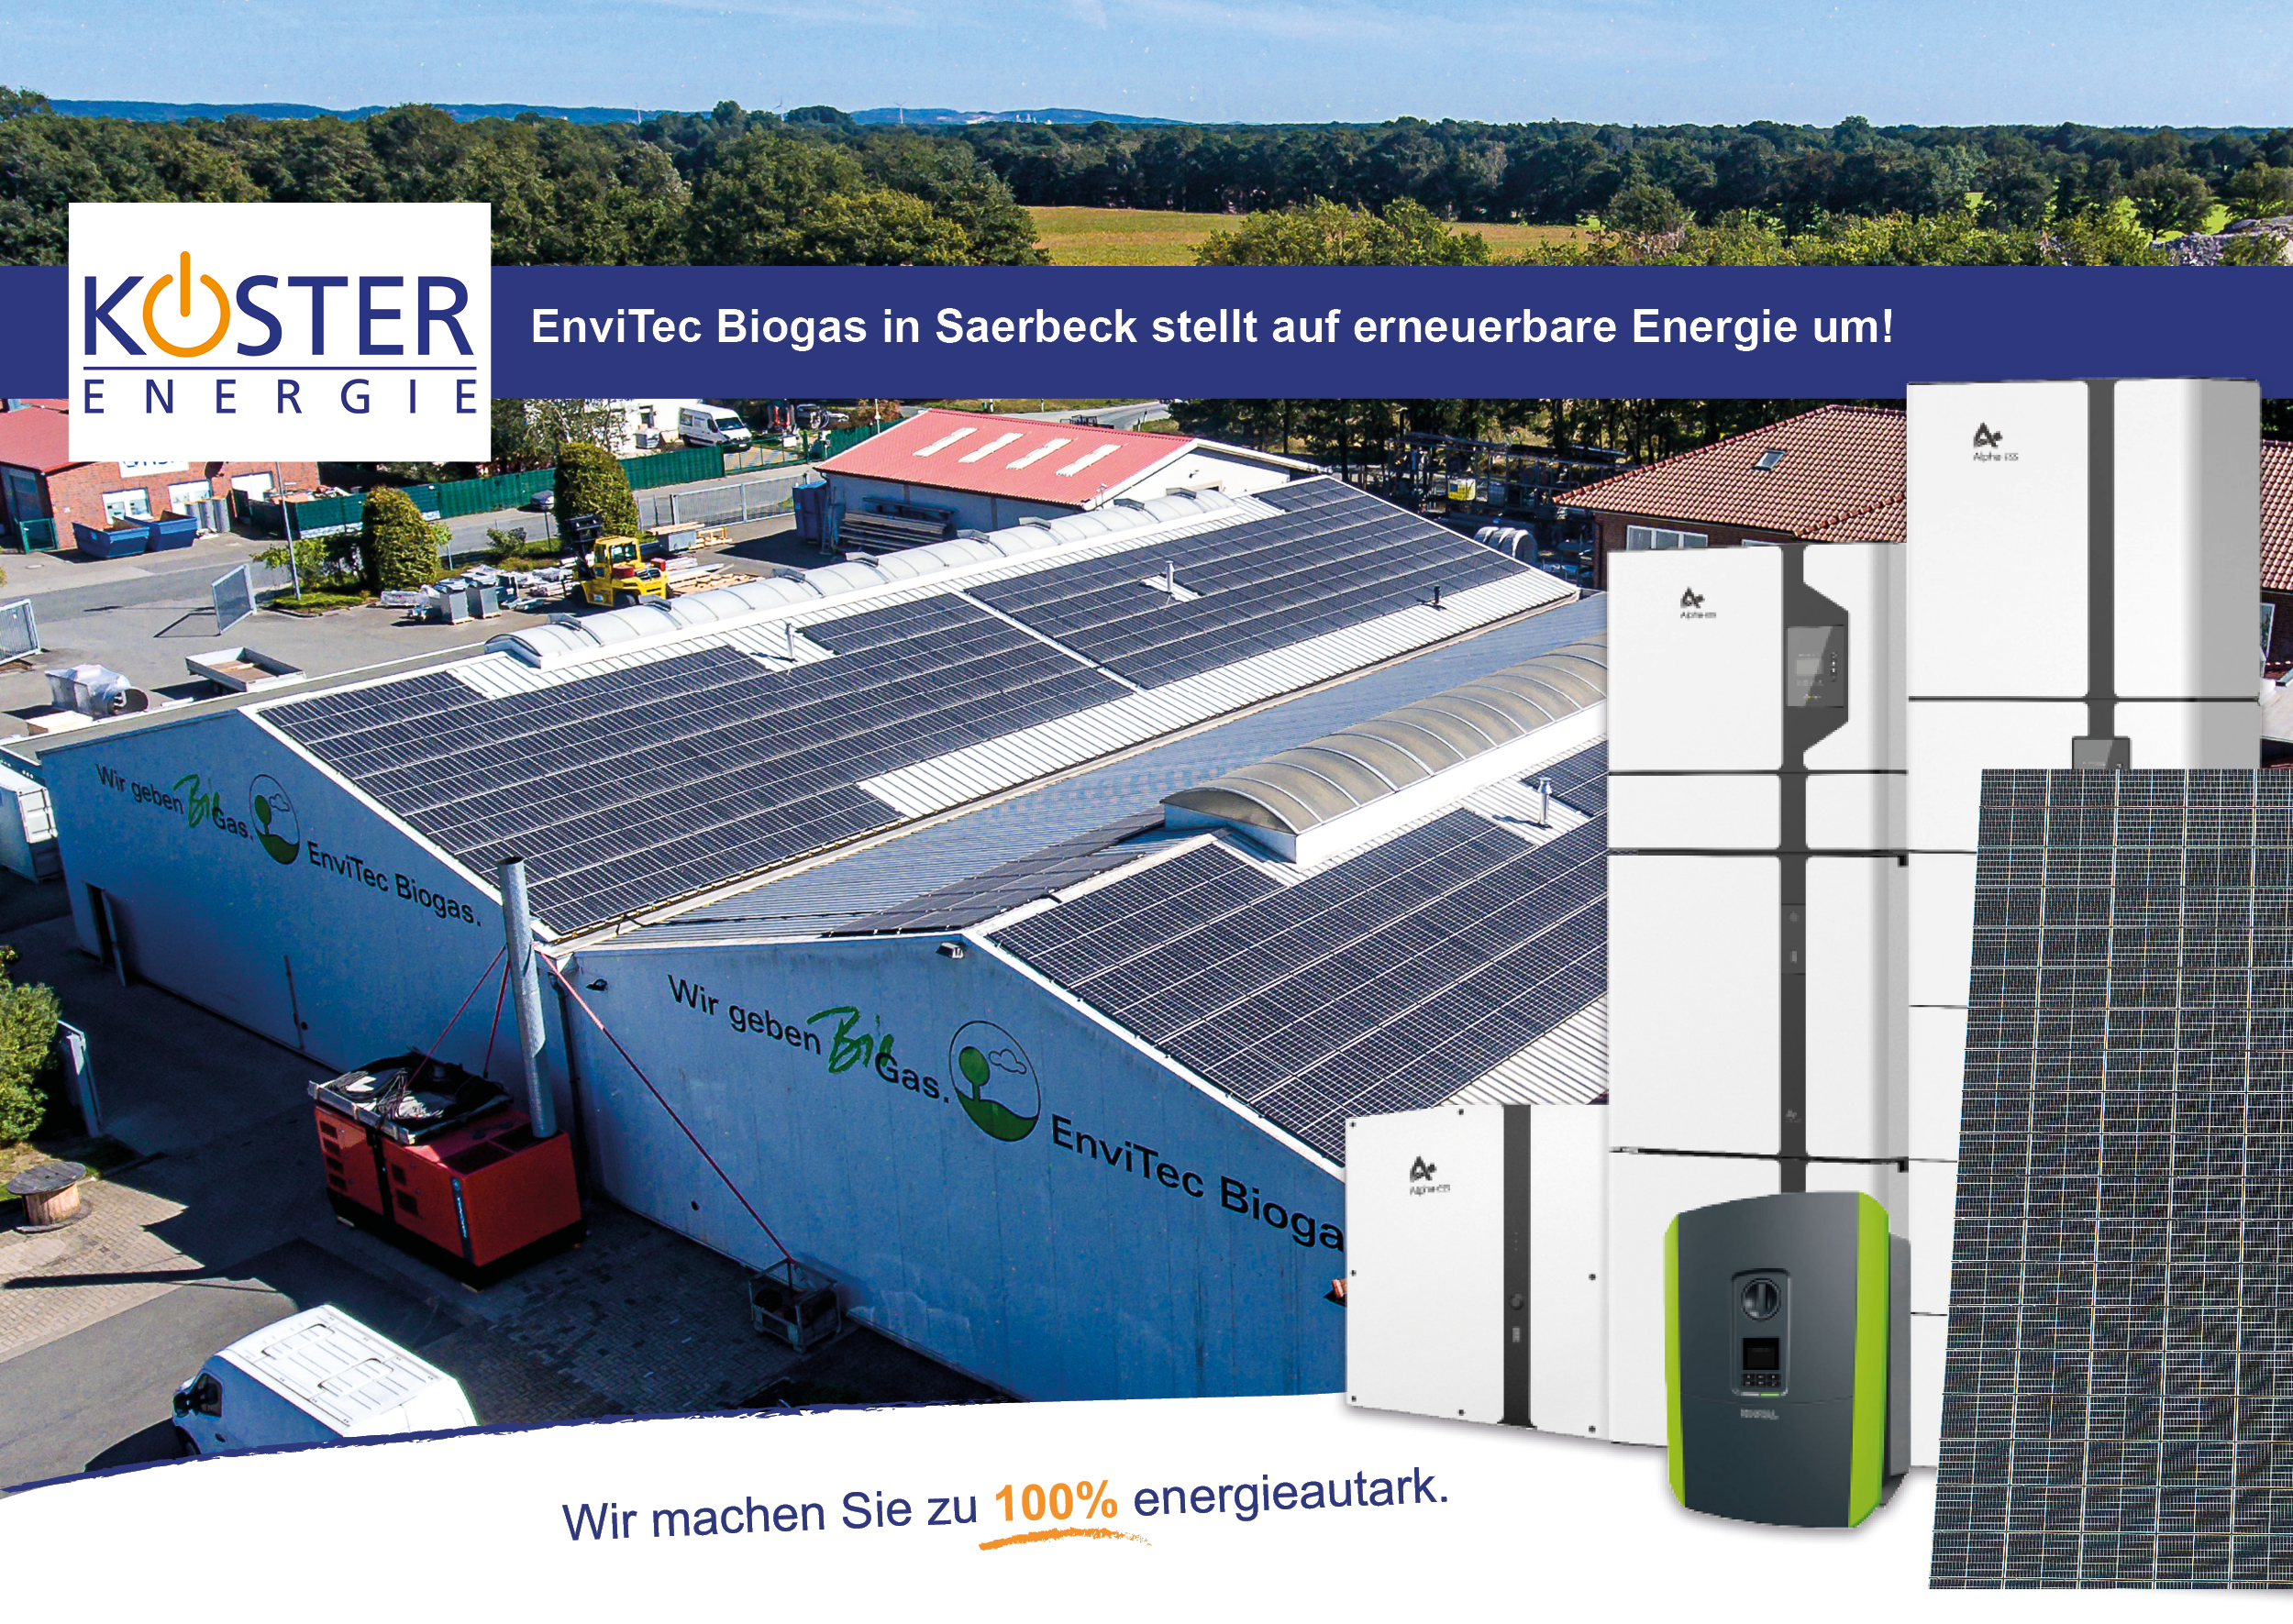 EnviTec Biogas stellt auf erneuerbare Energie um!